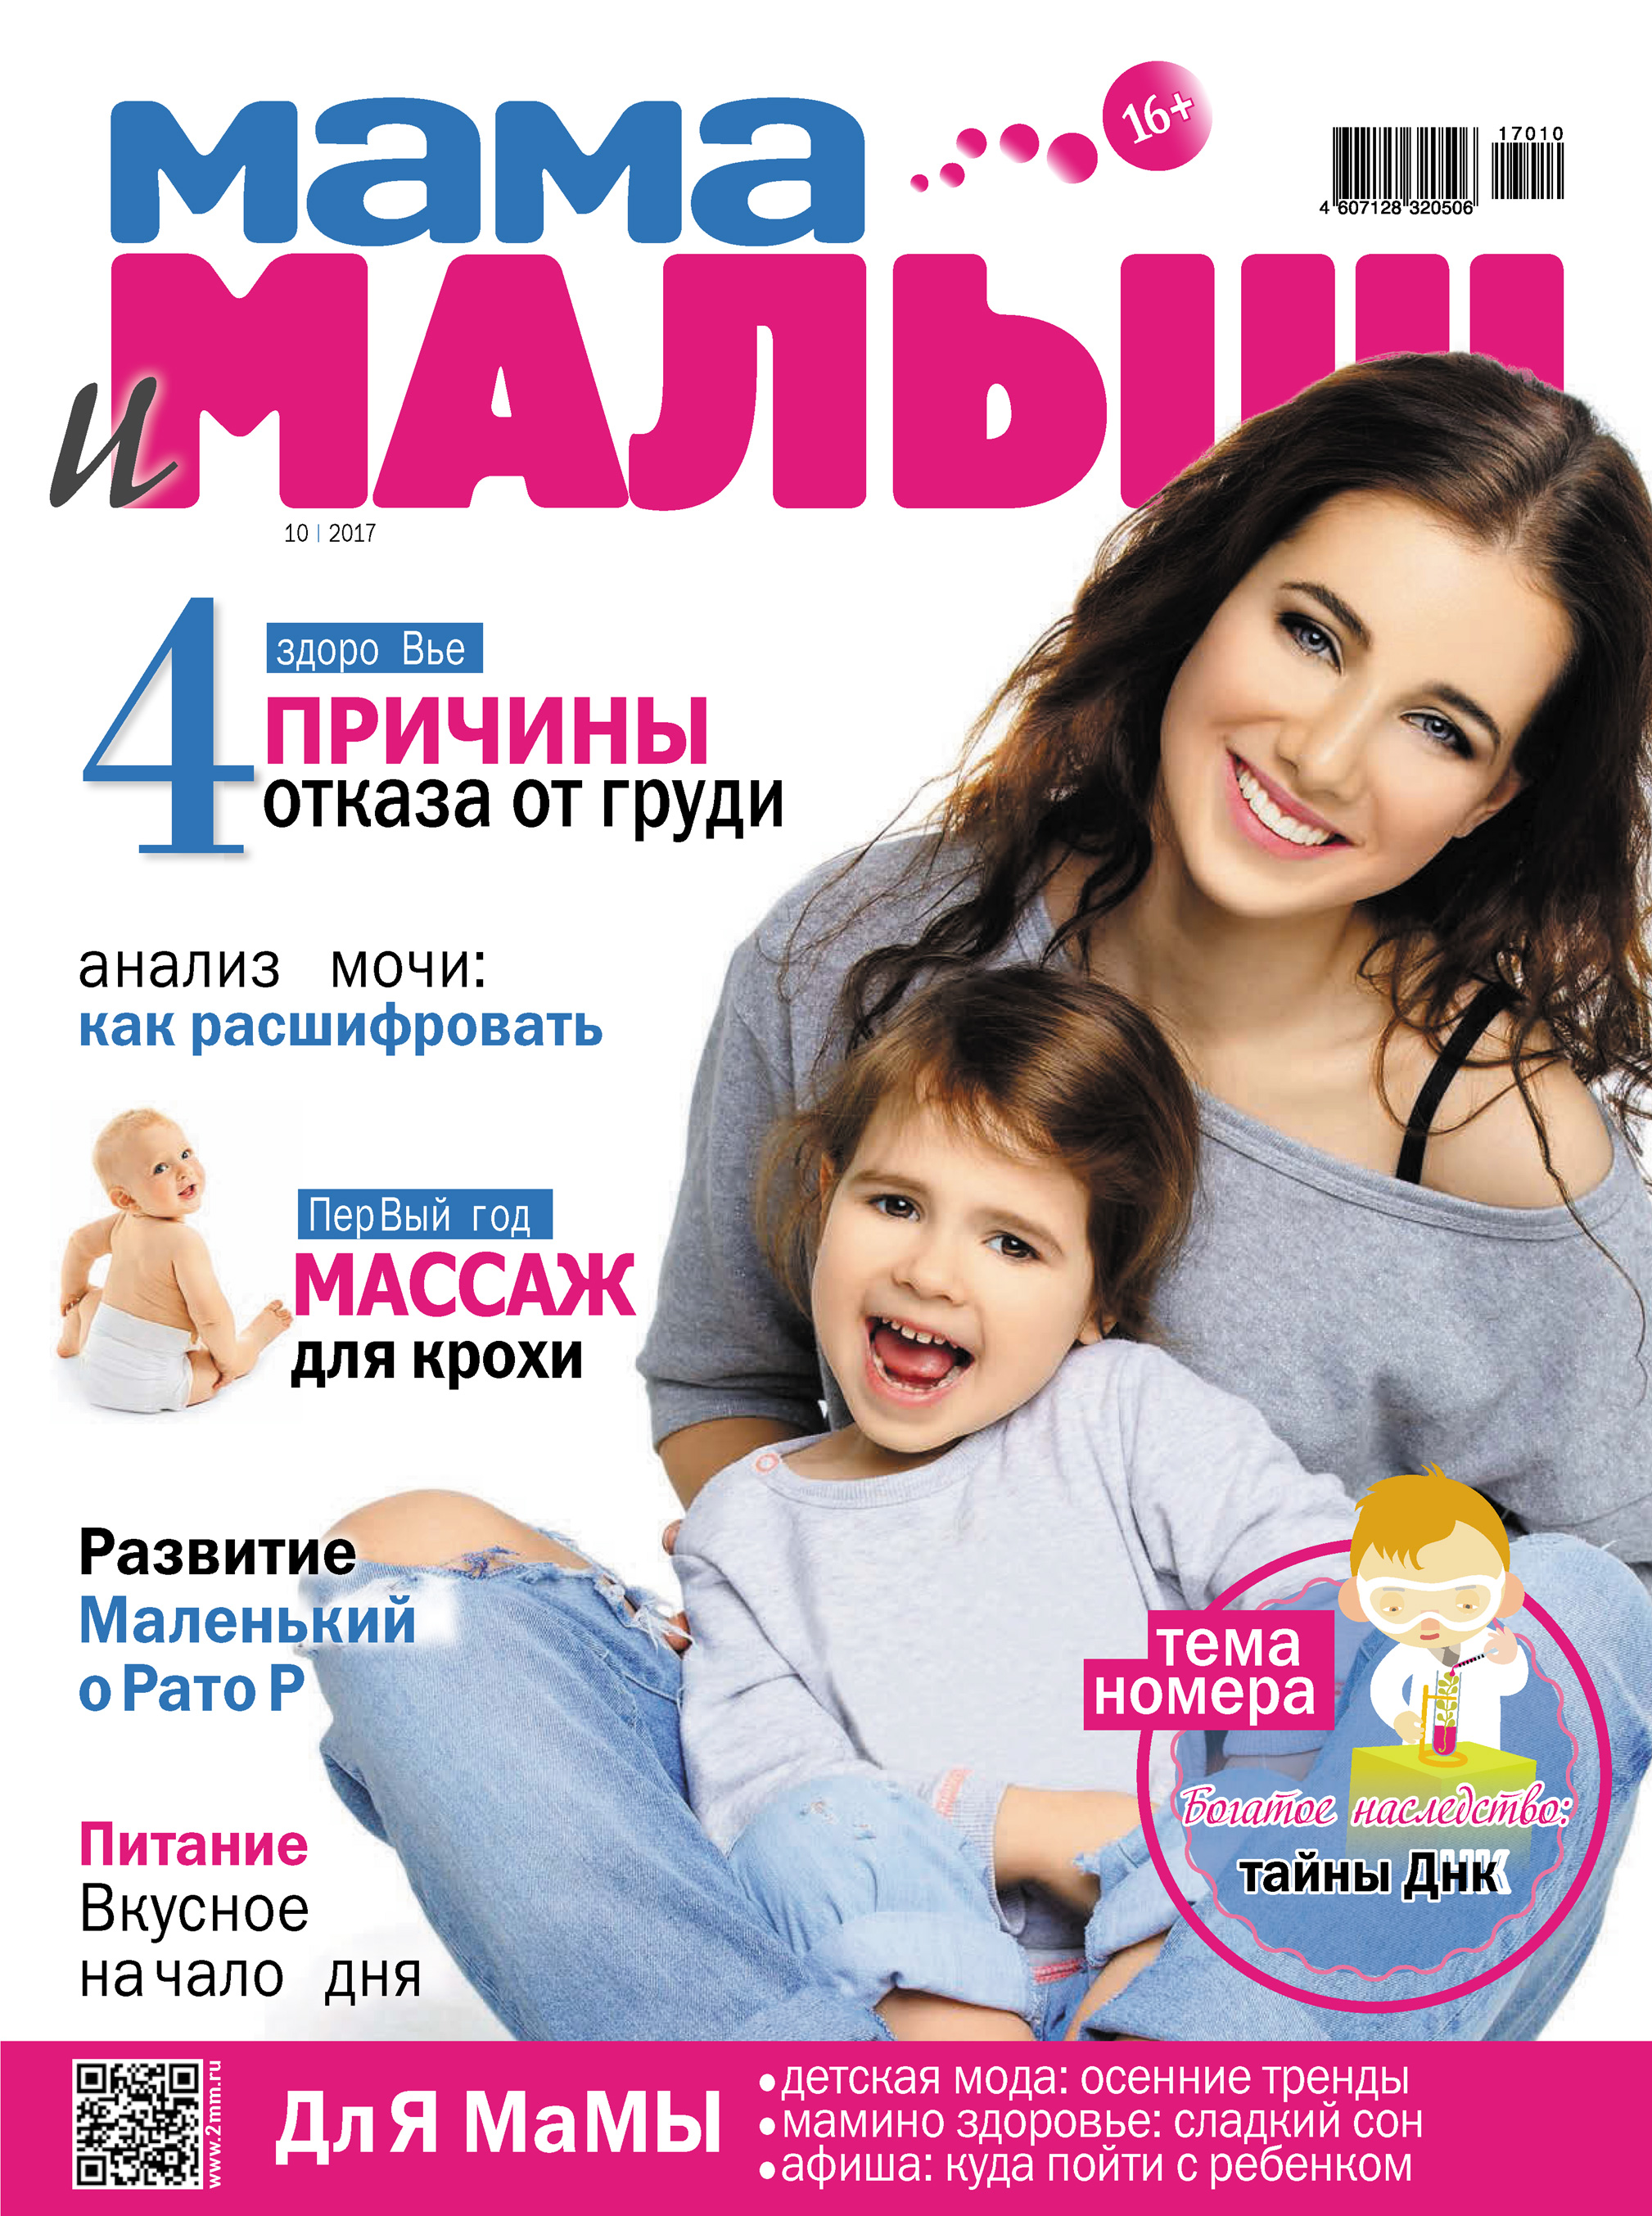 Журнал 1 мама. Журнал для мам. Журнал мама и малыш. Журнал для молодых мам. Журналы для мамочек.